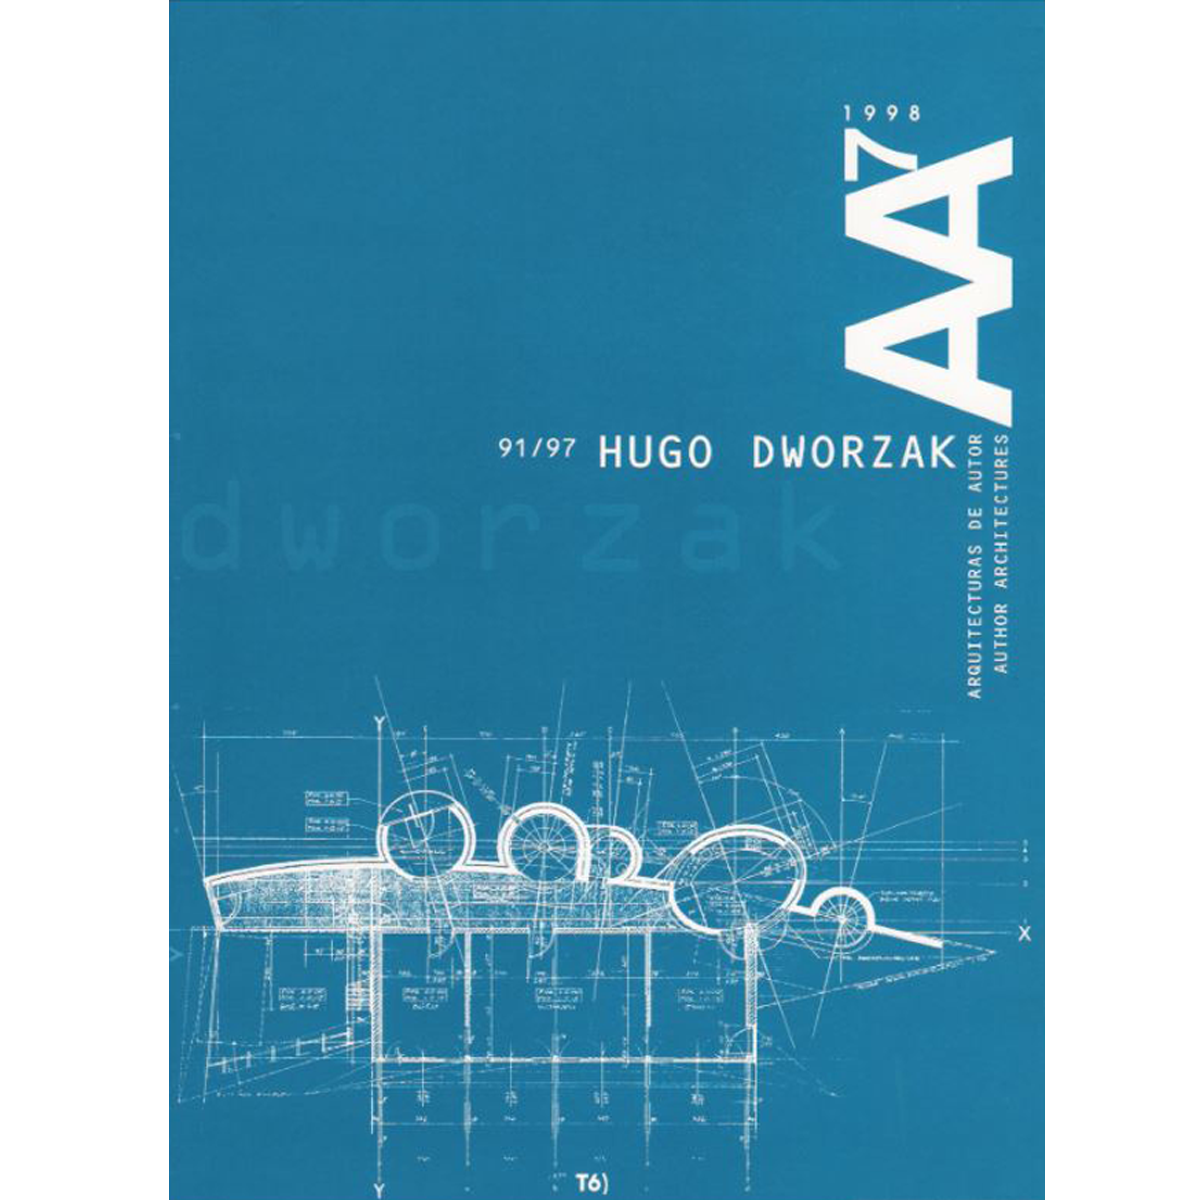 Hugo Dworzak: works